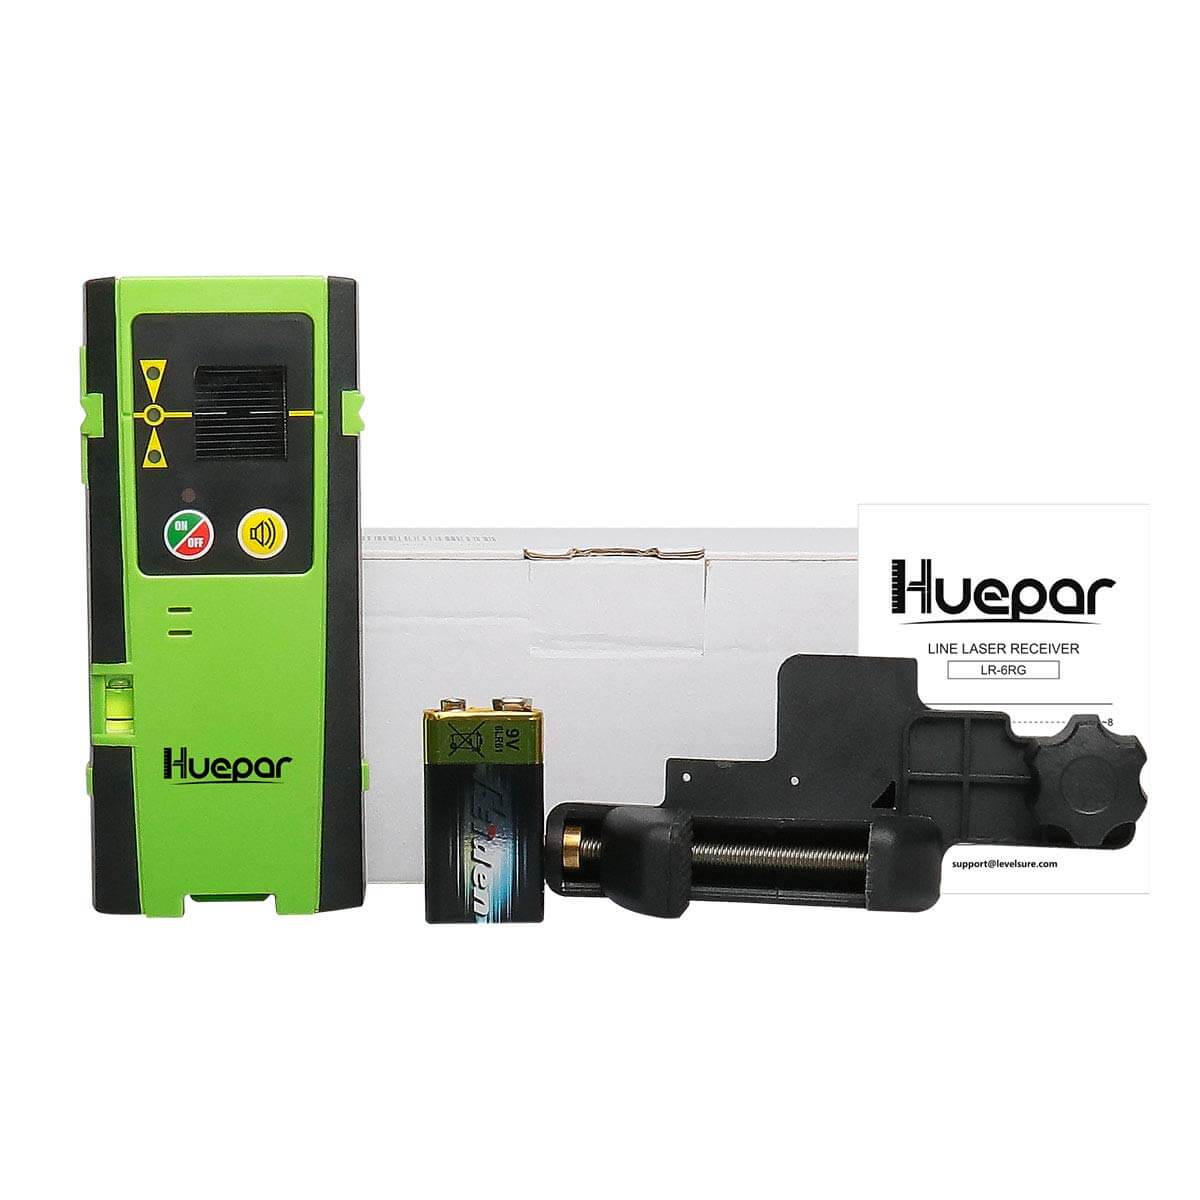 HUEPAR LR6RG - Line Laser Receiver HUEPAR EU - Laser Level